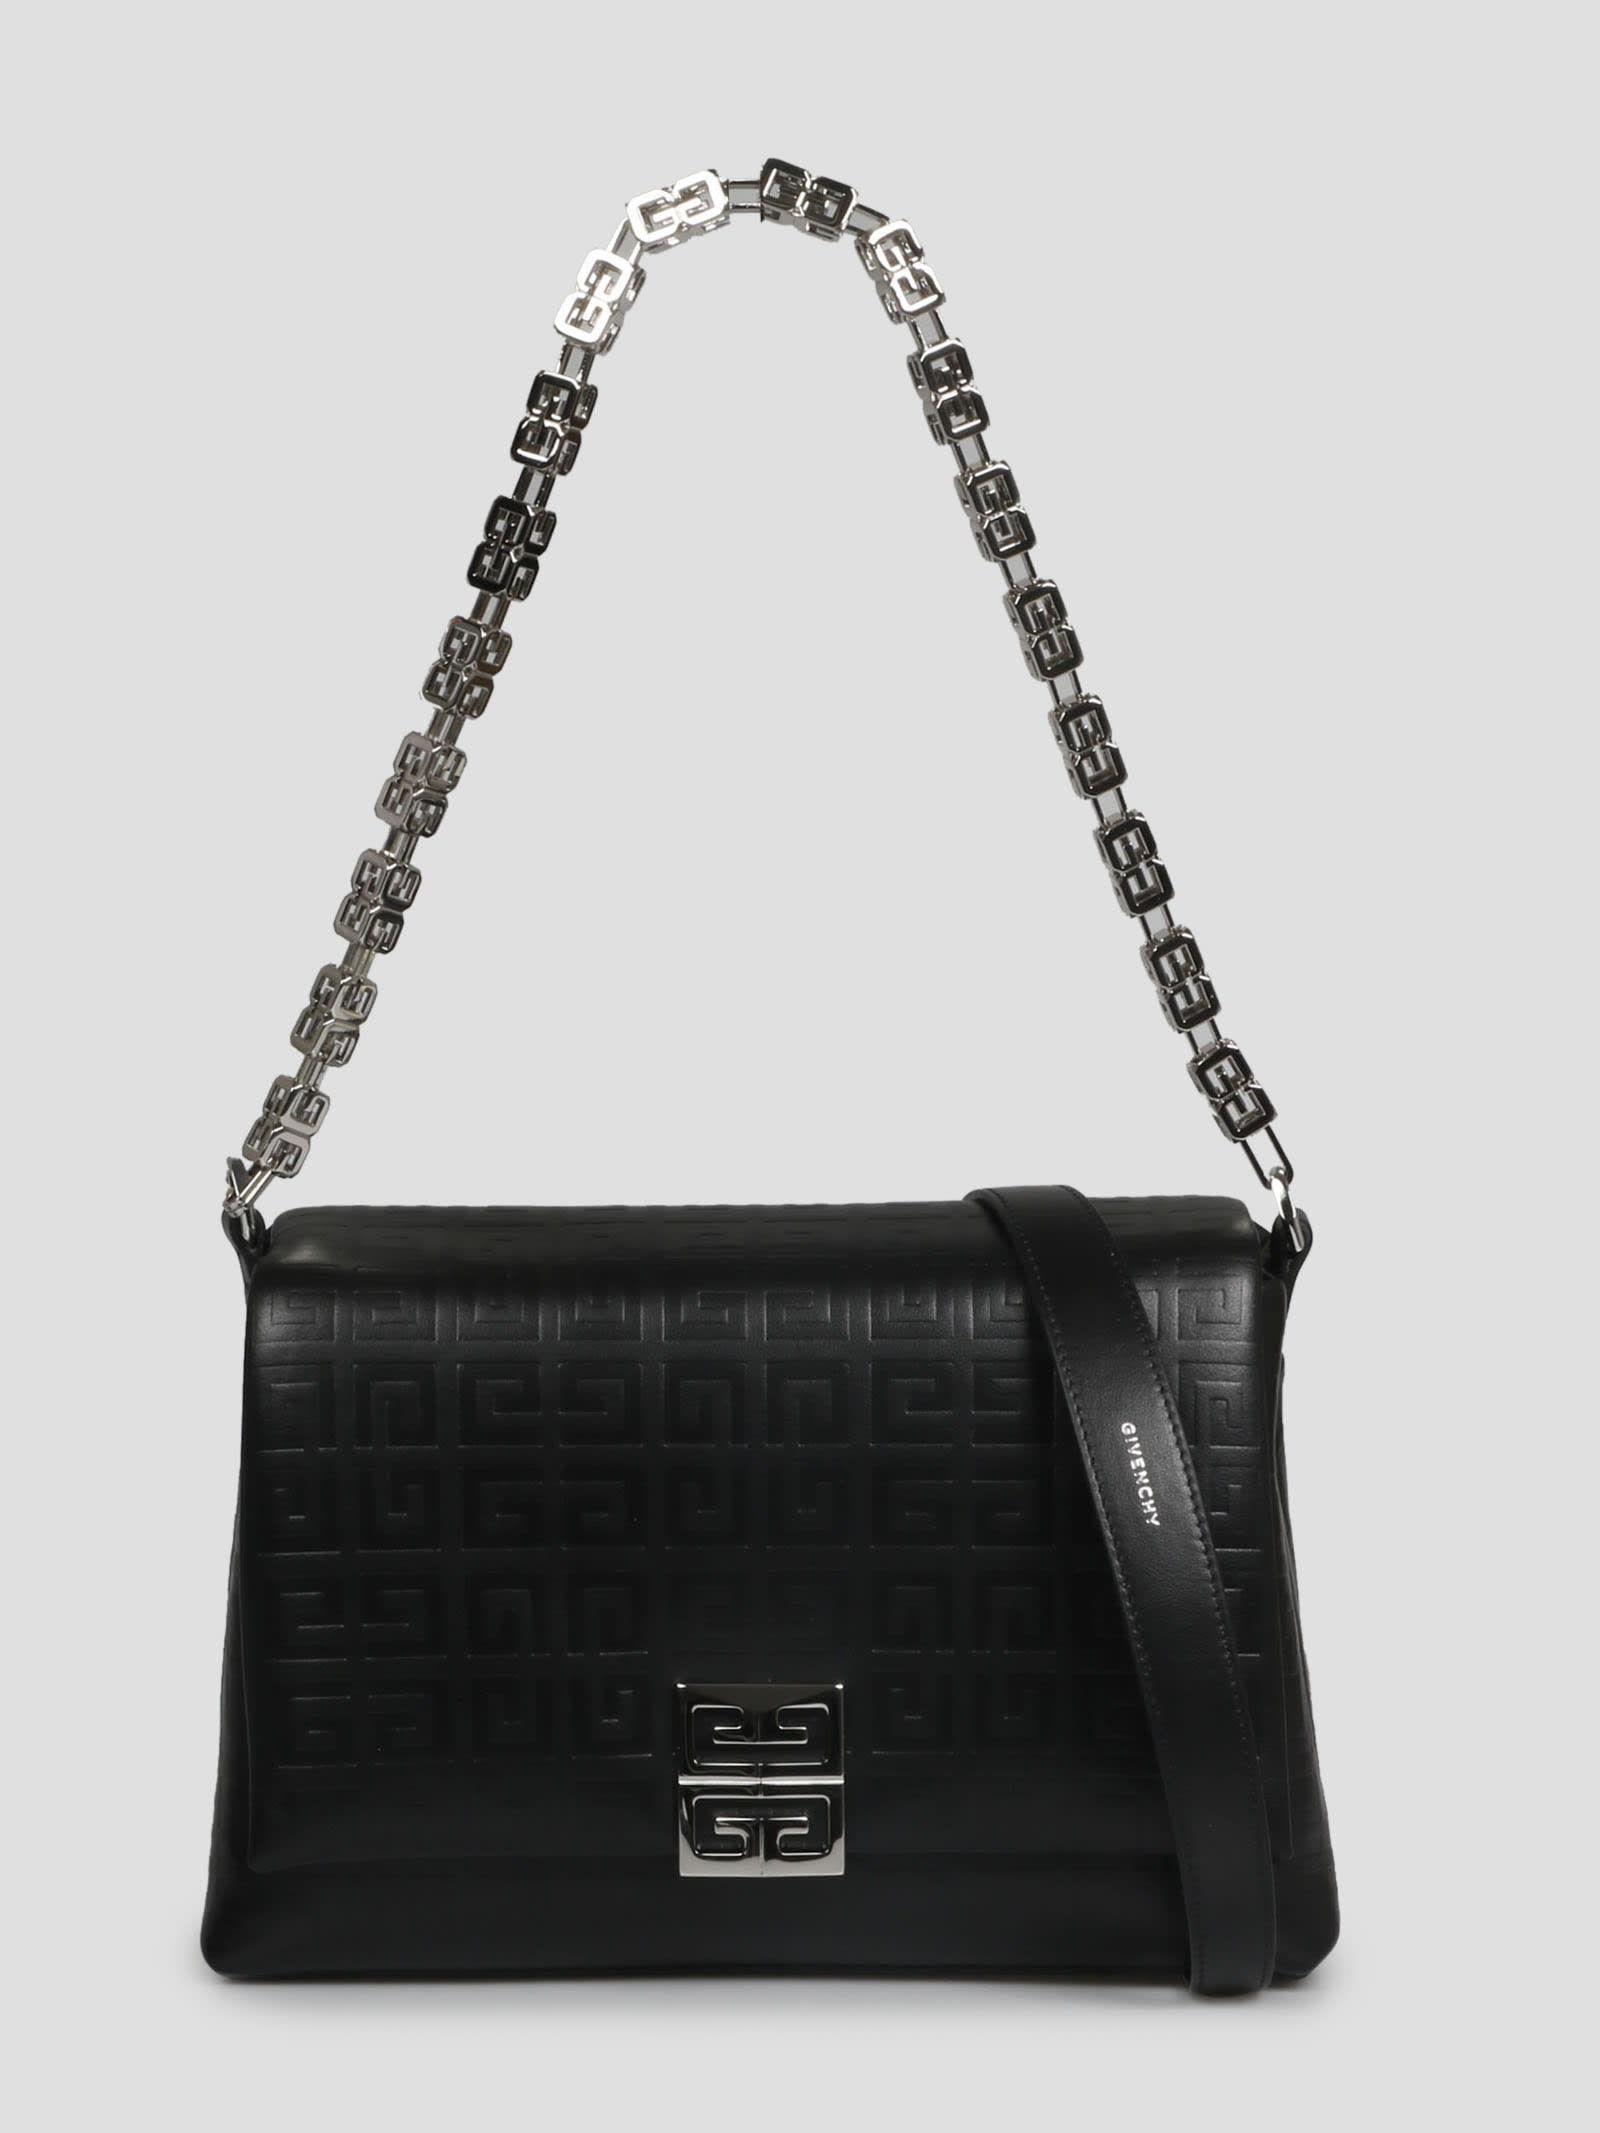 Givenchy 4g Soft Medium Bag